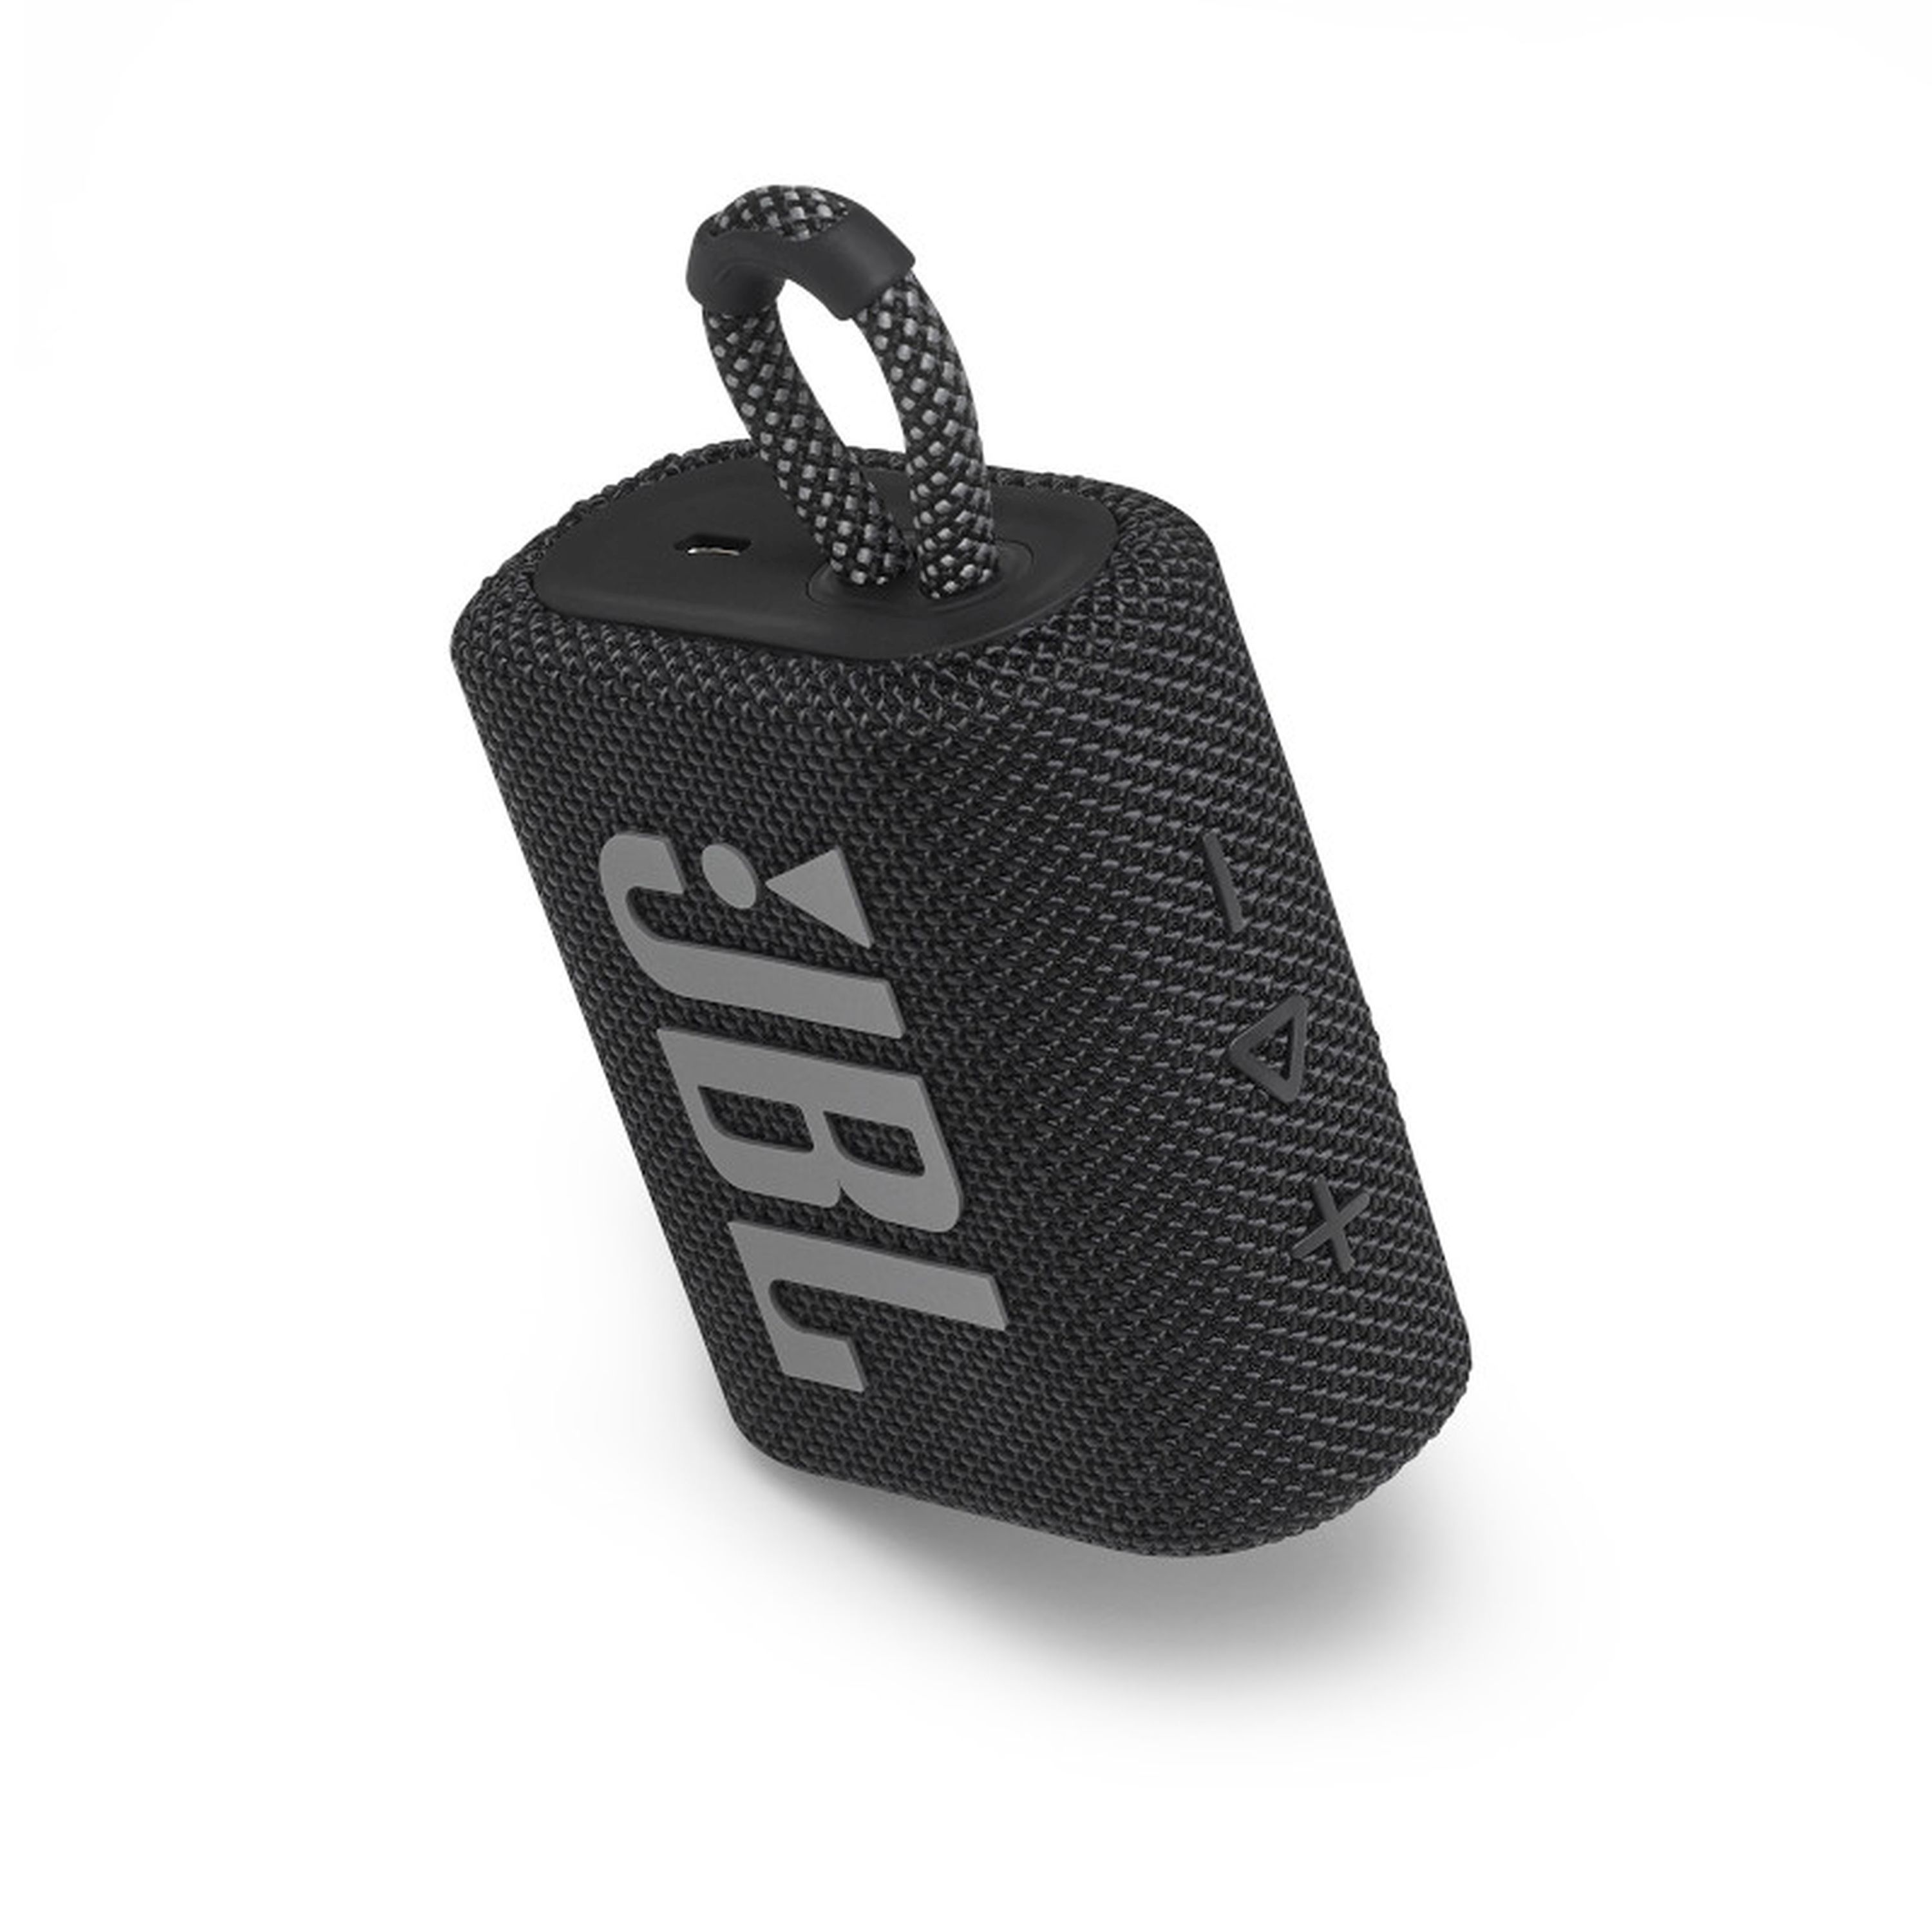 JBL Go 3 BT Speaker- Black 3.4-in 0.555-Watt Bluetooth